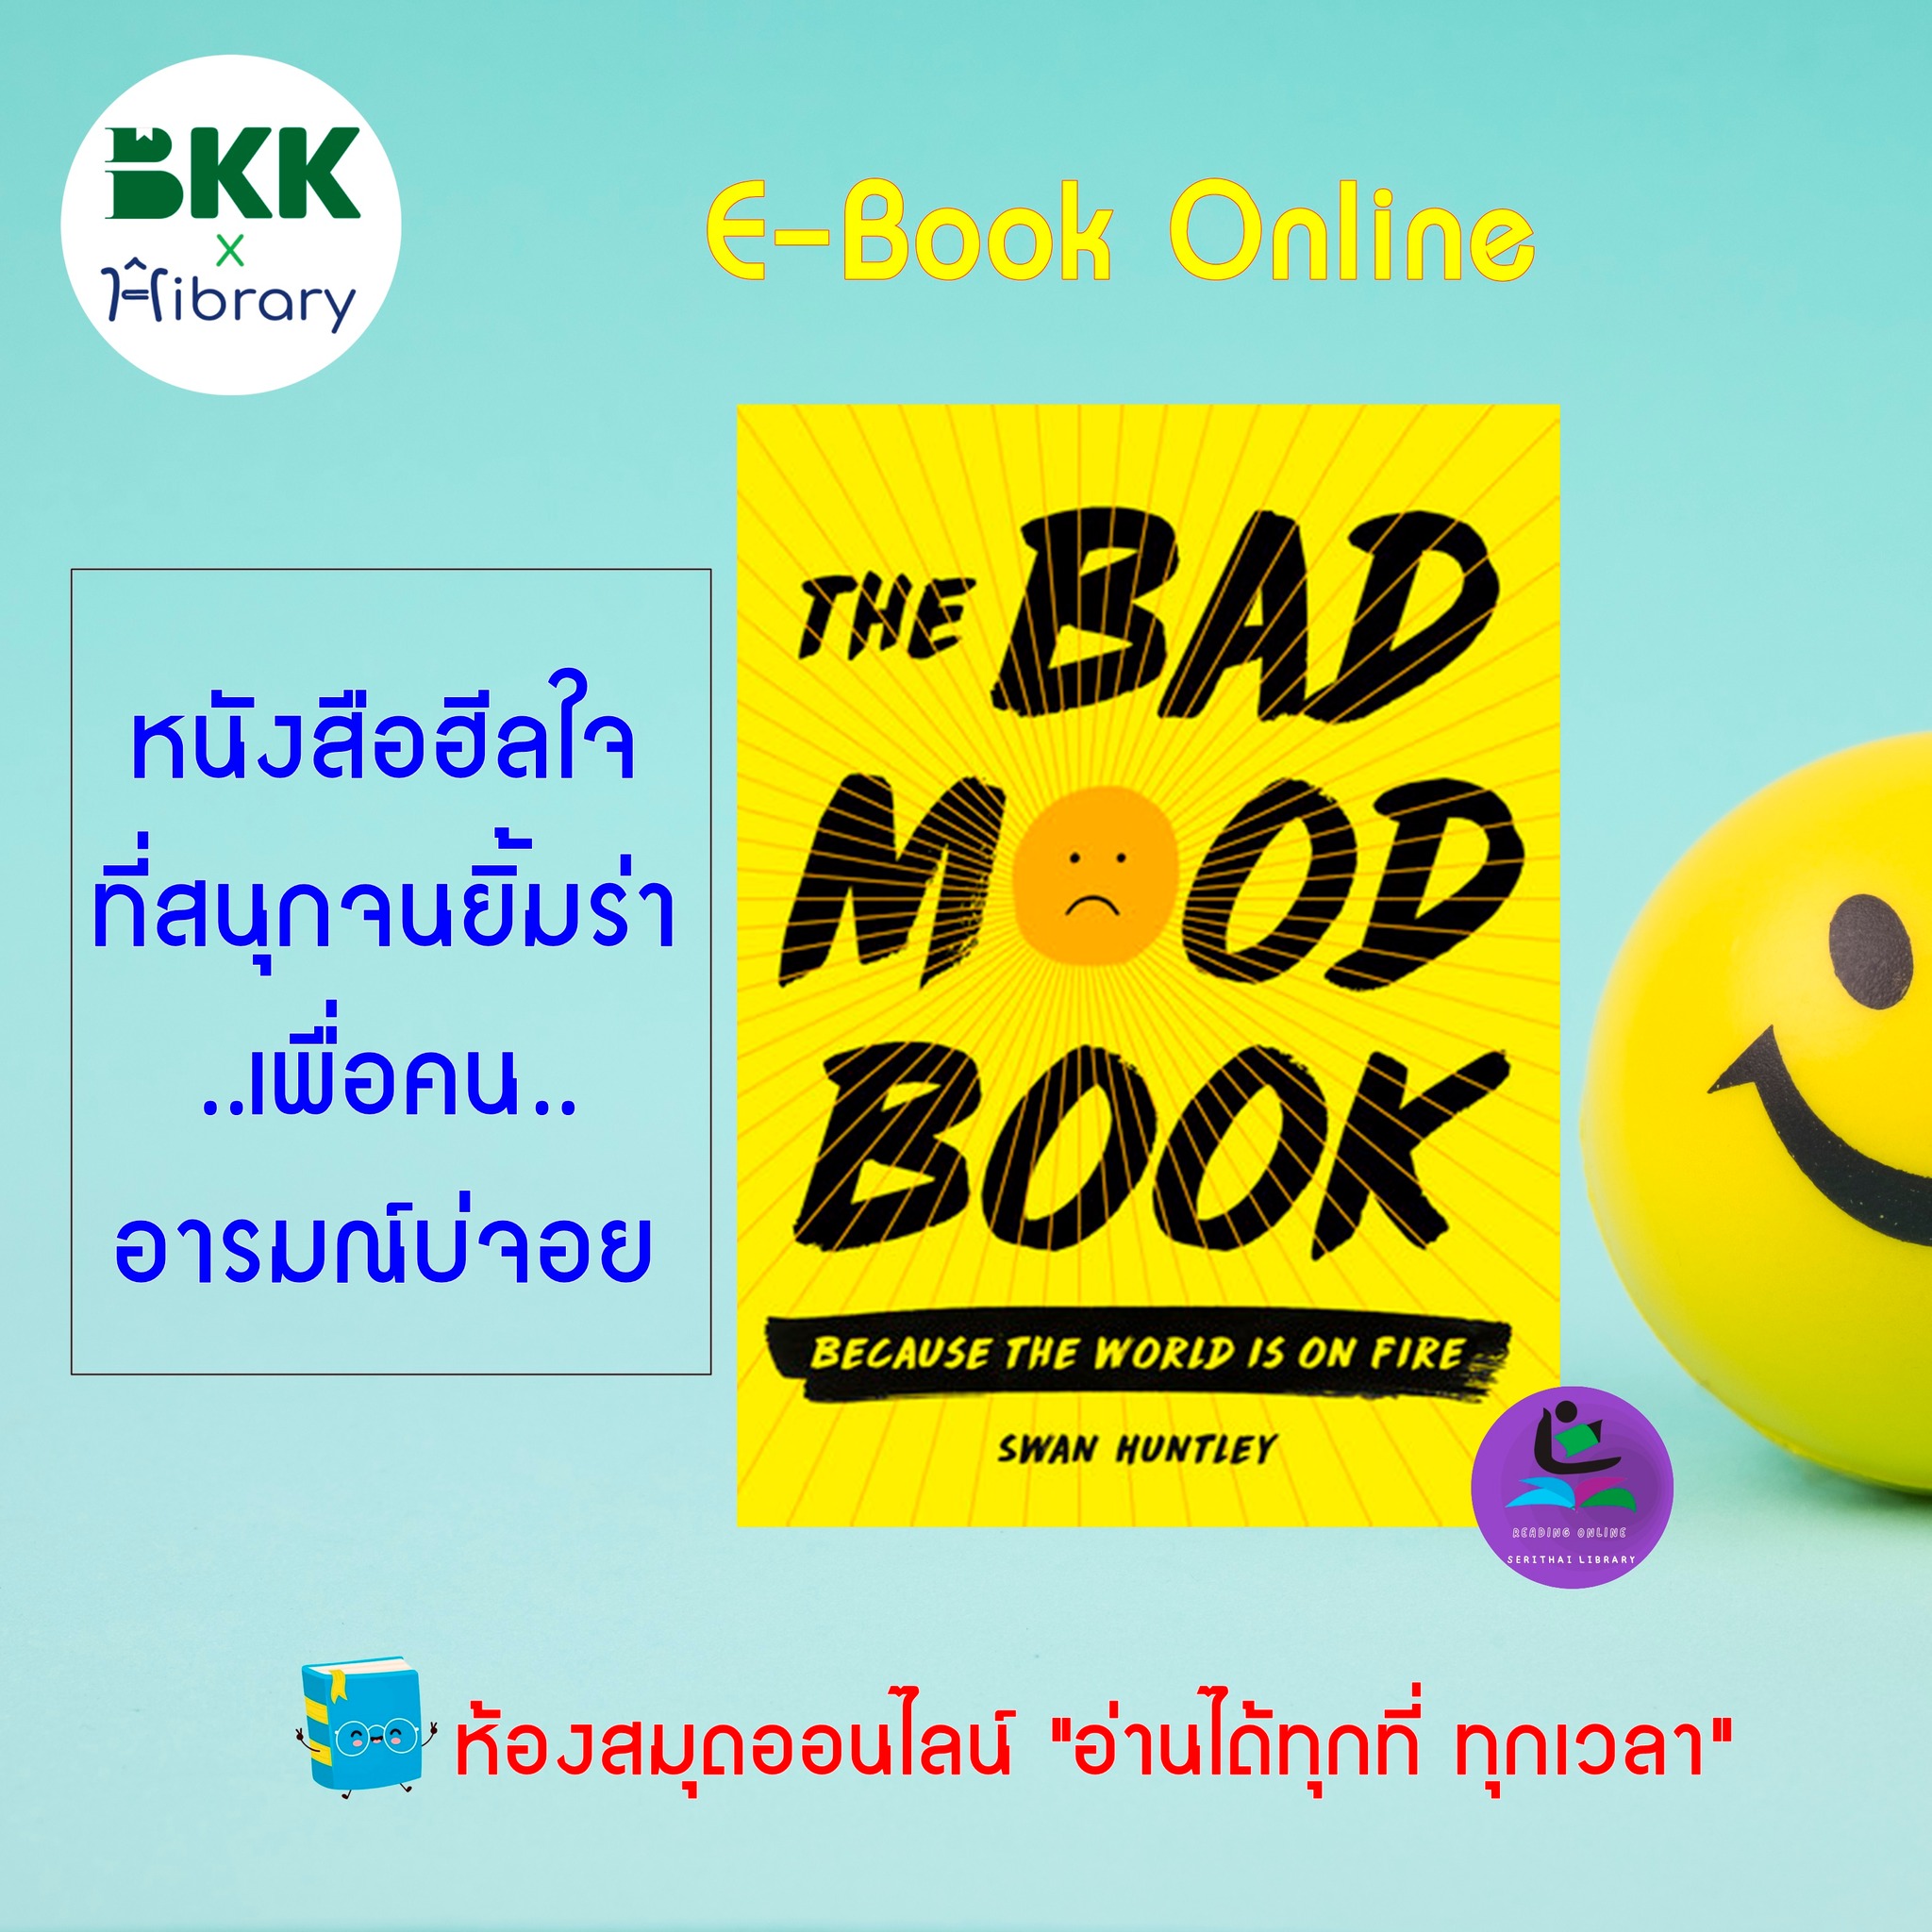 The Bad Mood Book หนังสือของคนอารมณ์เสีย